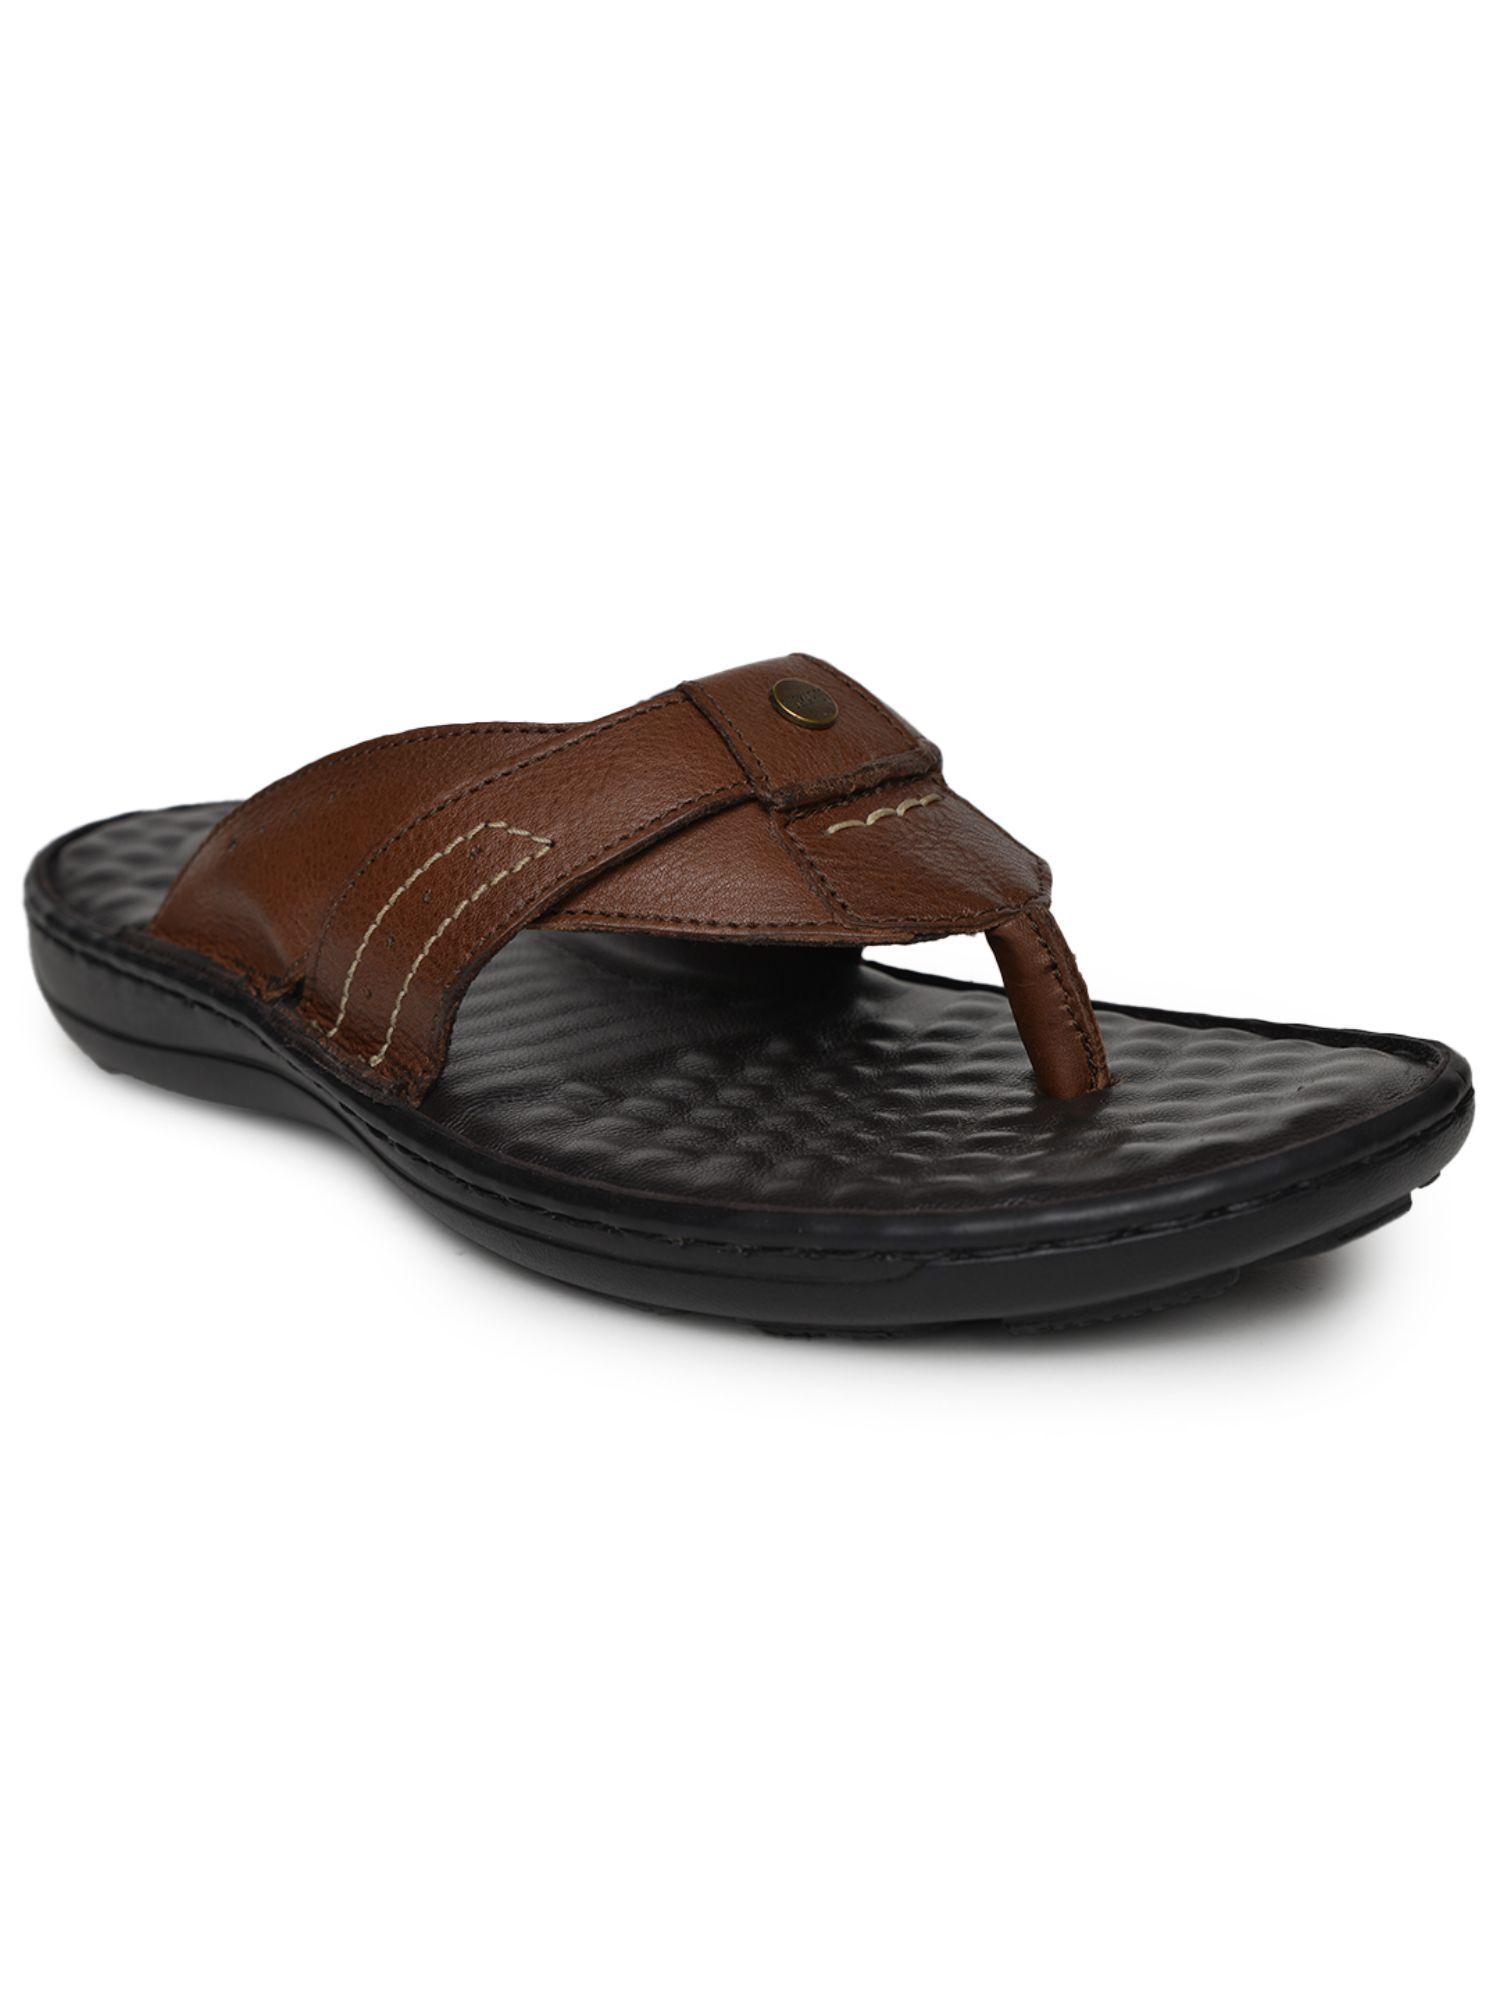 zanelio genuine leather casual sandals for mens